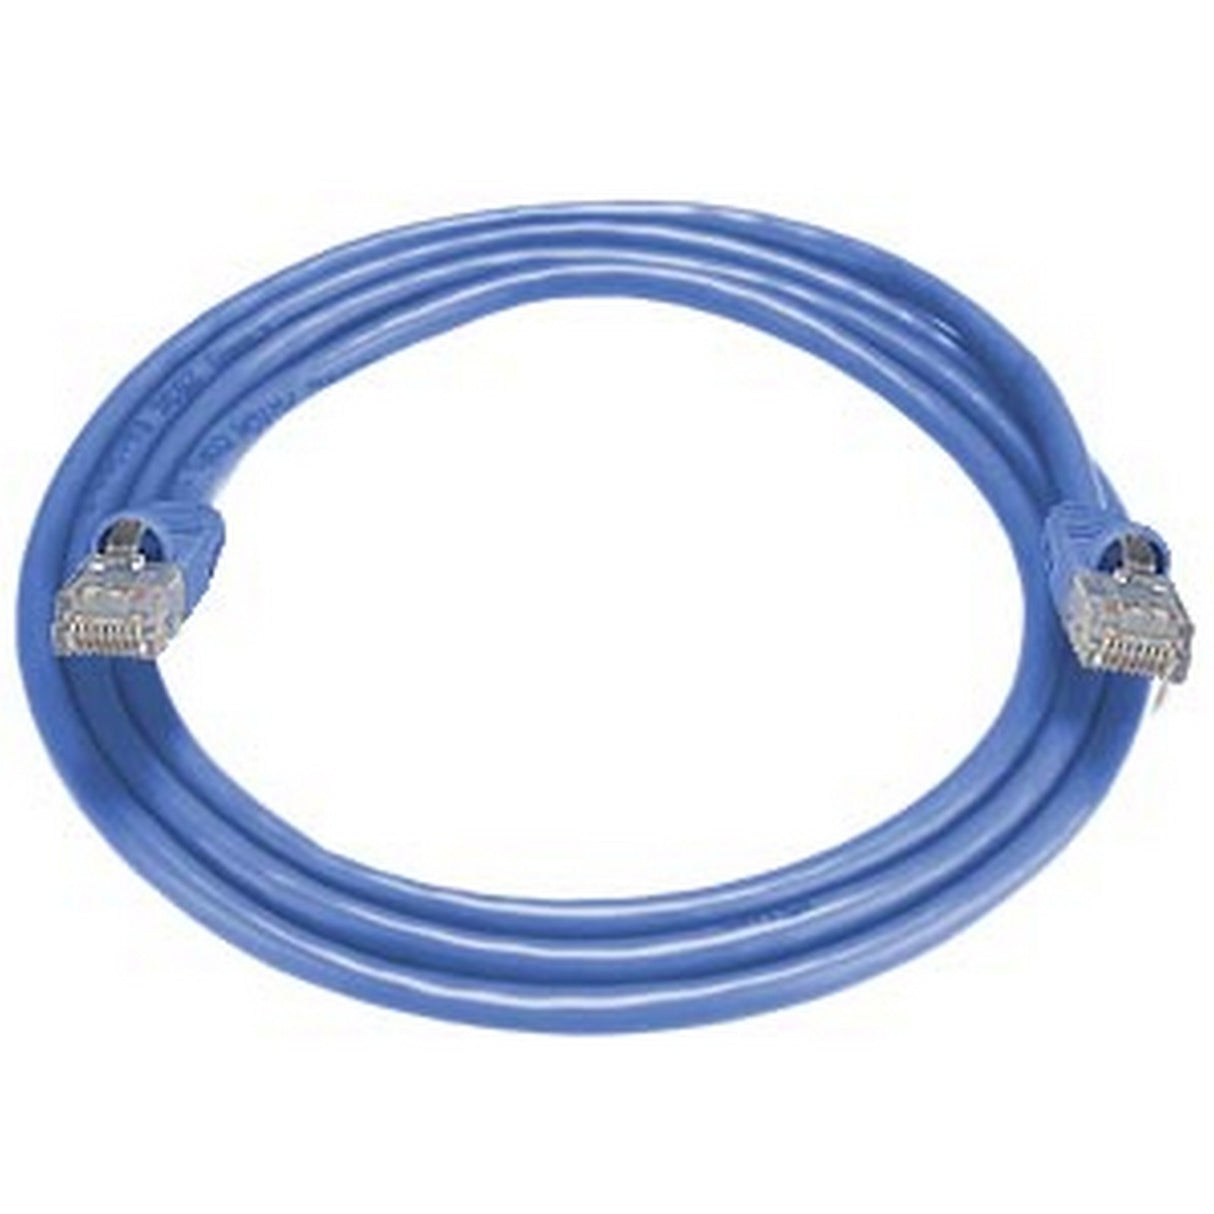 NTI CAT5E-7-BLUE CAT5e Stranded Unshielded Cable, Blue, 7-Foot